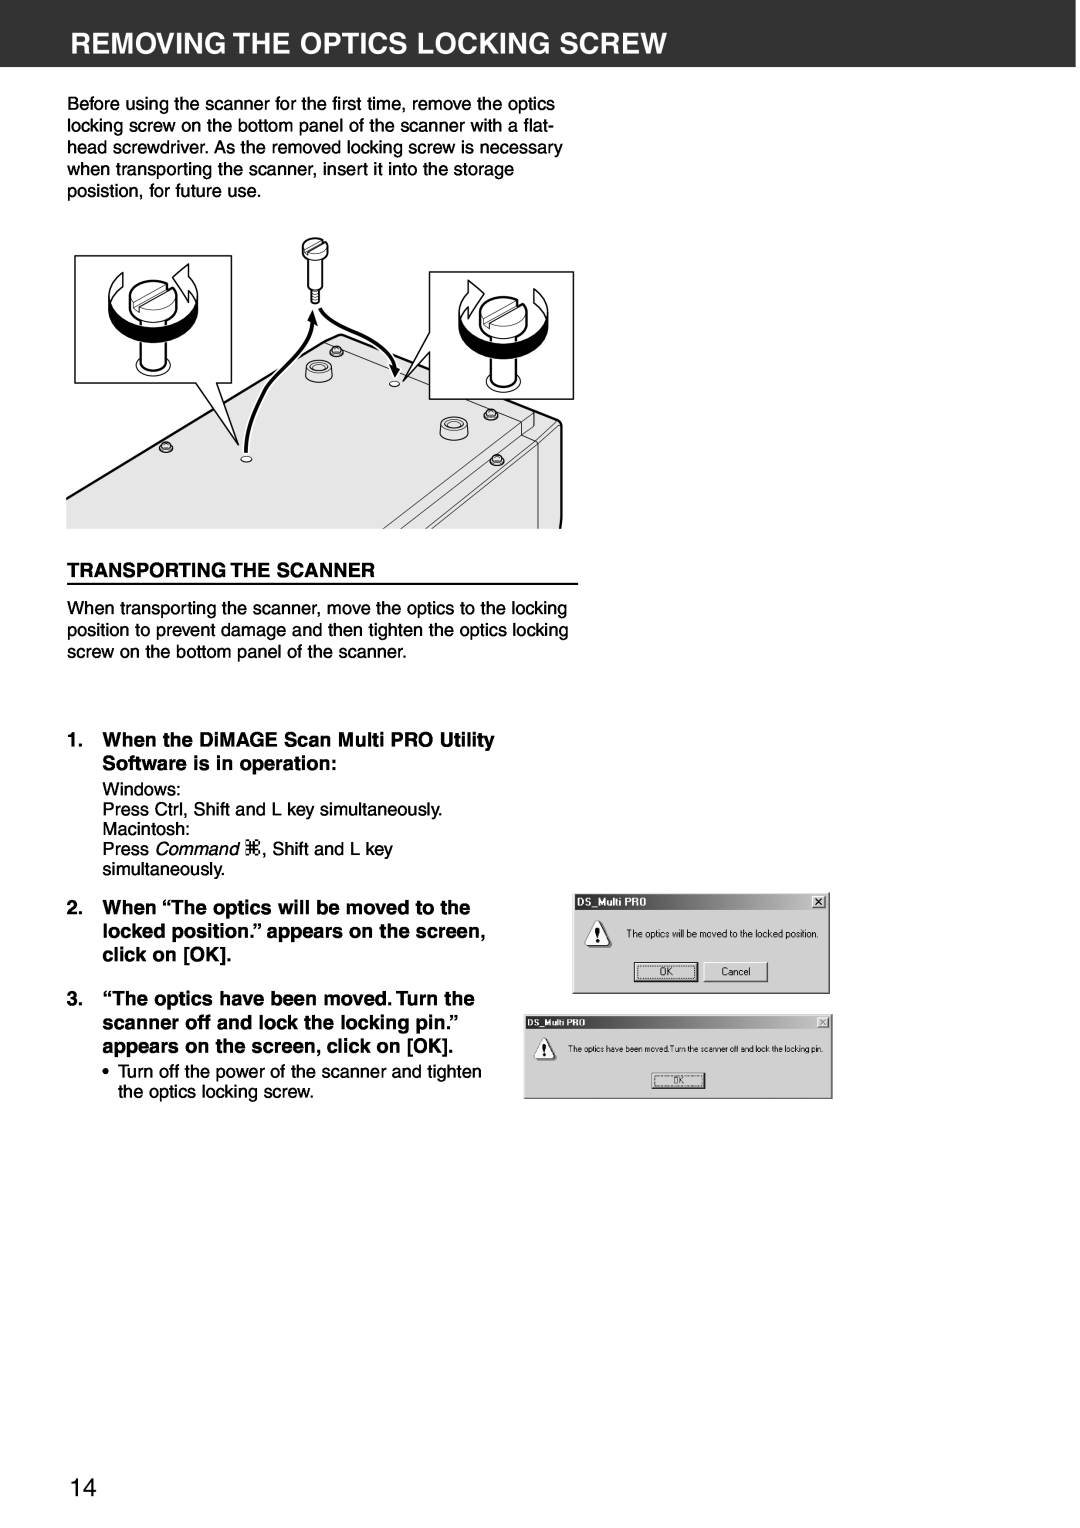 Konica Minolta Scan Multi PRO instruction manual Removing The Optics Locking Screw, Transporting The Scanner 